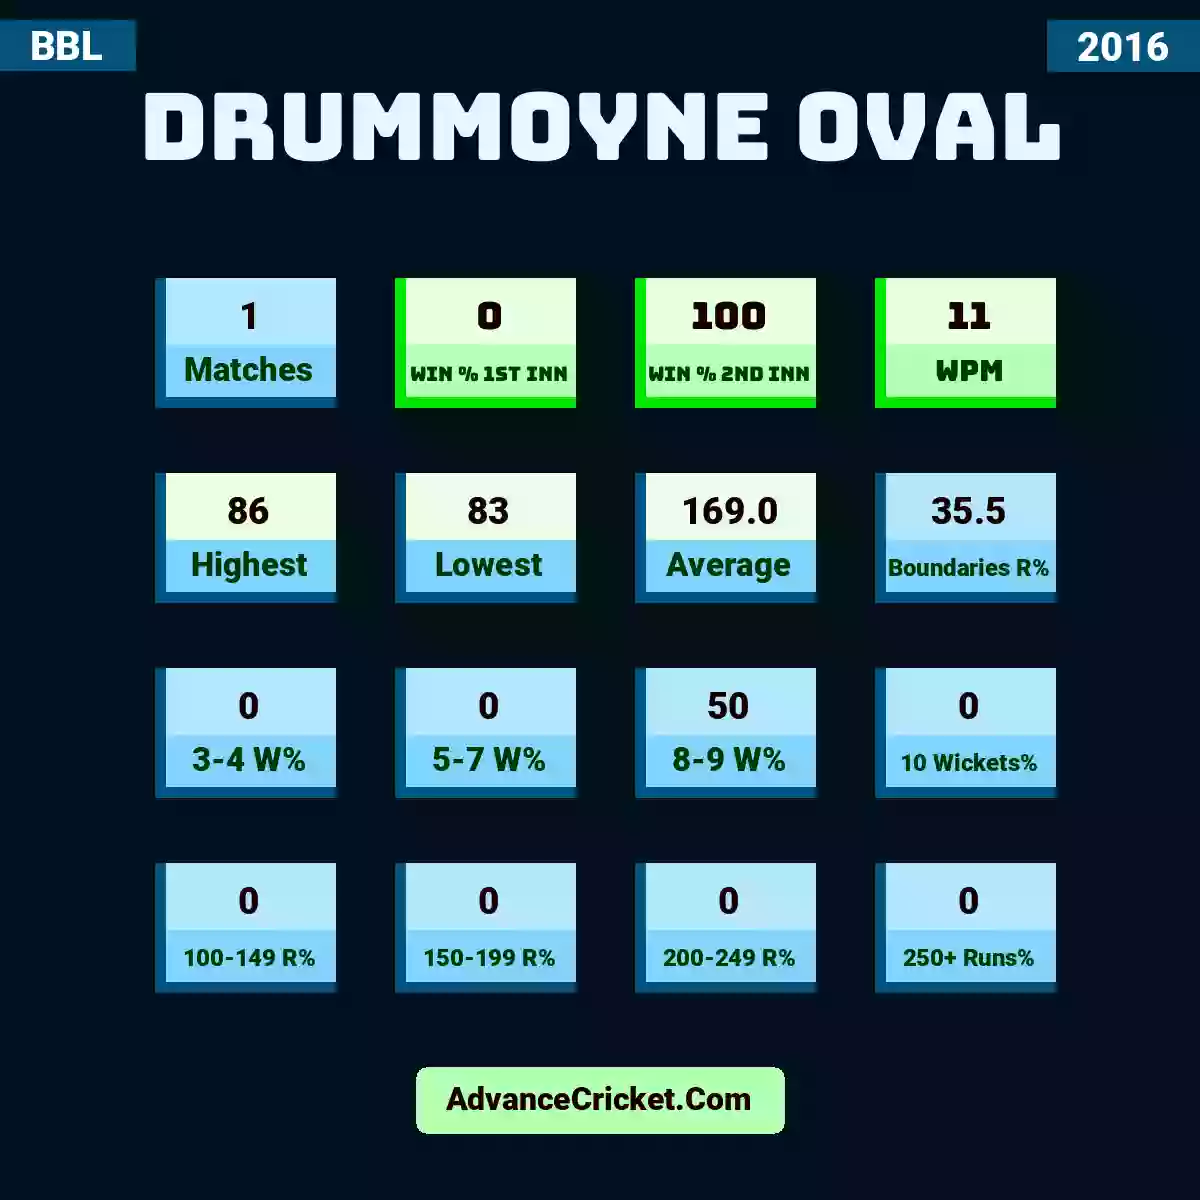 Image showing Drummoyne Oval with Matches: 1, Win % 1st Inn: 0, Win % 2nd Inn: 100, WPM: 11, Highest: 86, Lowest: 83, Average: 169.0, Boundaries R%: 35.5, 3-4 W%: 0, 5-7 W%: 0, 8-9 W%: 50, 10 Wickets%: 0, 100-149 R%: 0, 150-199 R%: 0, 200-249 R%: 0, 250+ Runs%: 0.